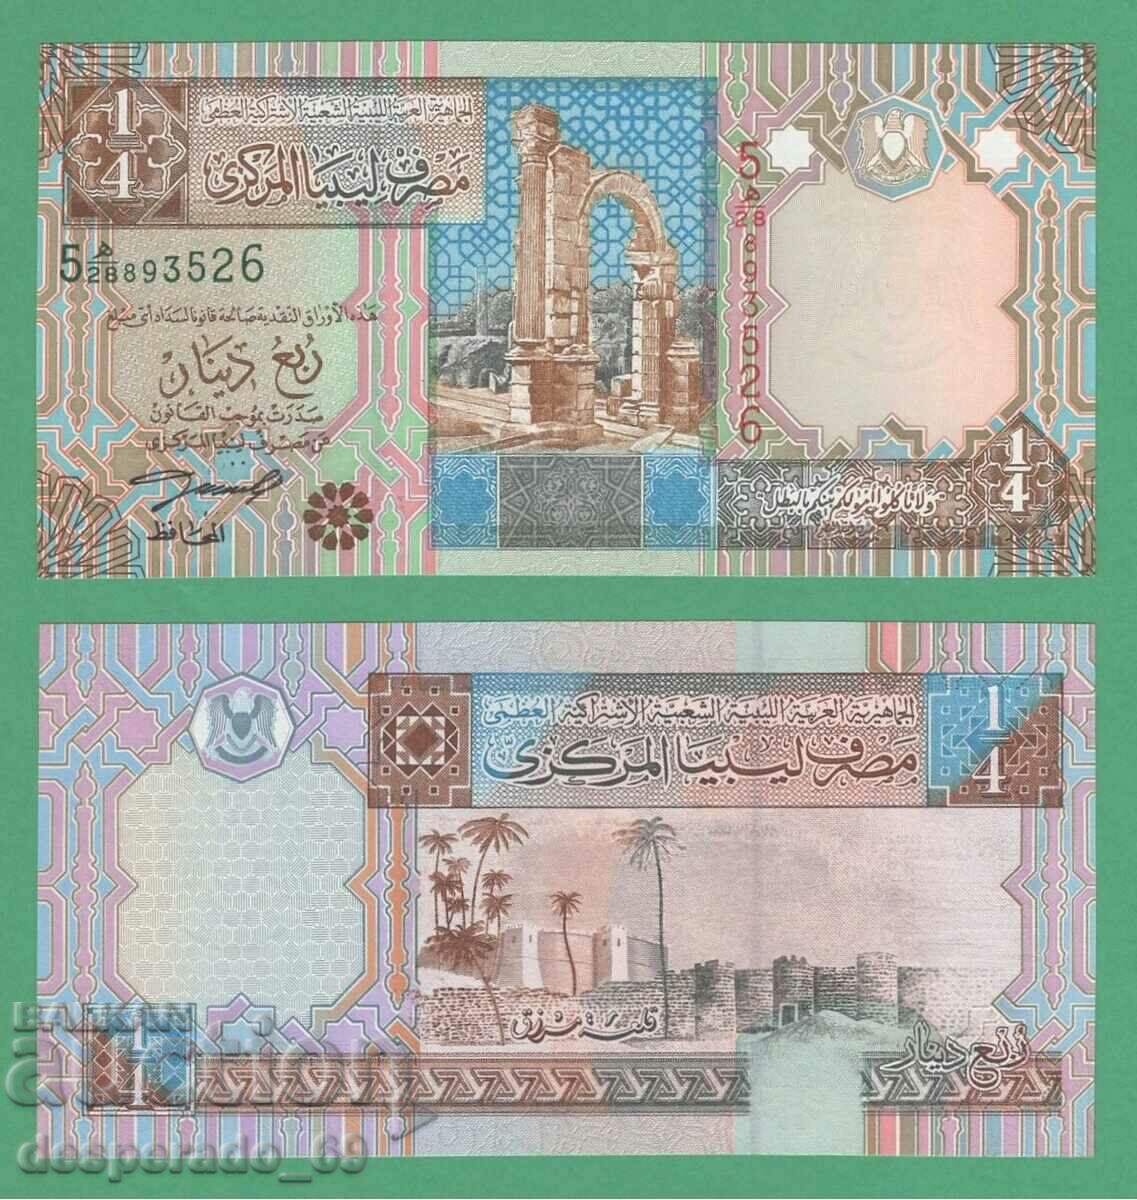 (¯`'•.¸ LIBIA 1/4 dinar 2002 UNC ¸.•'´¯)